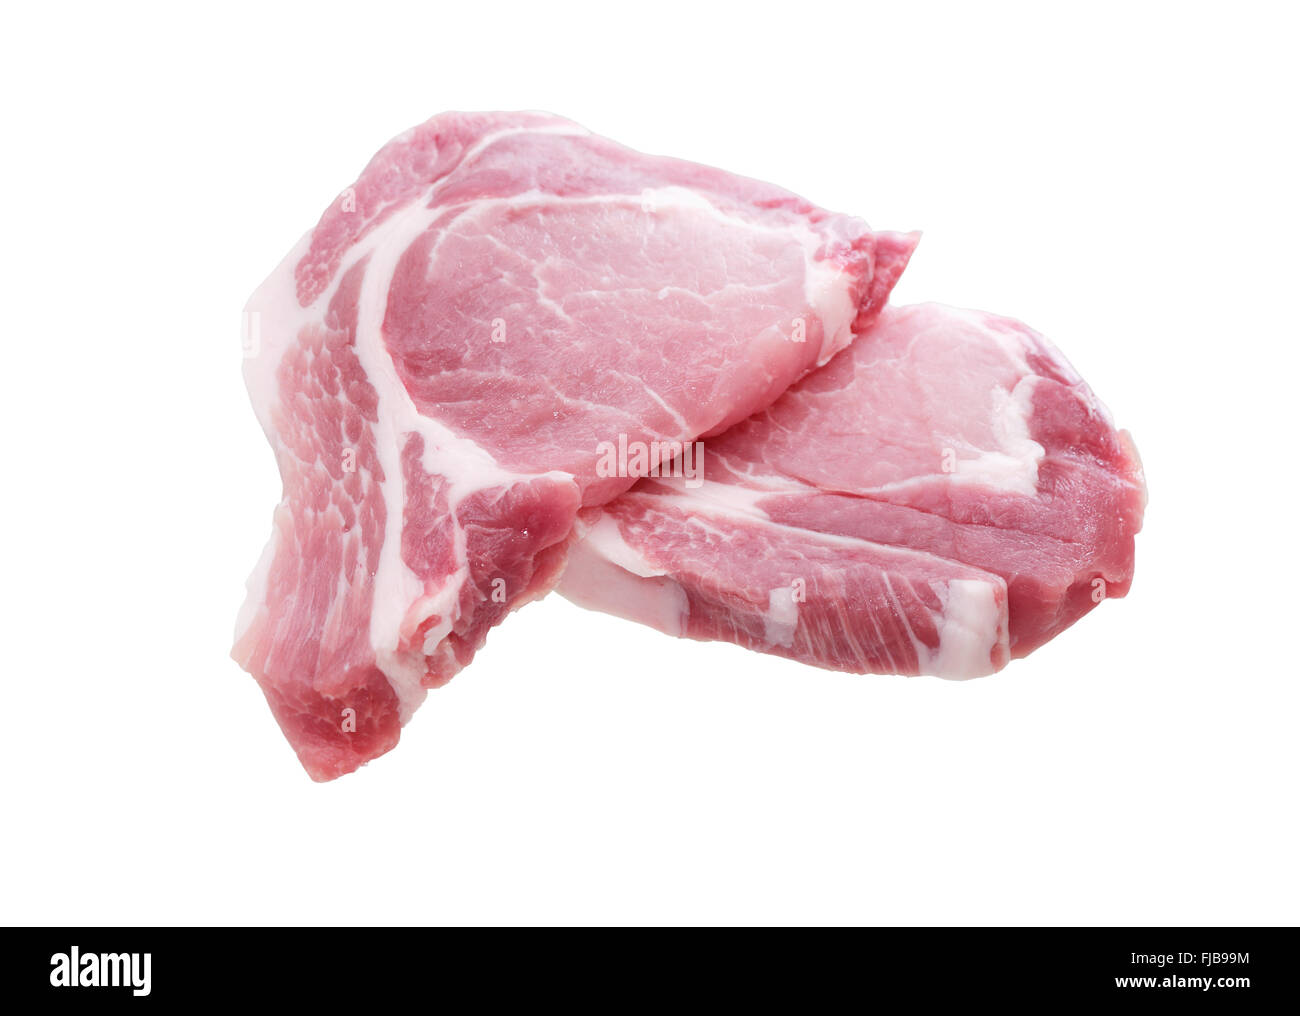 Close-up Of Raw Pork Chop 1269941 Stock Photo At Vecteezy